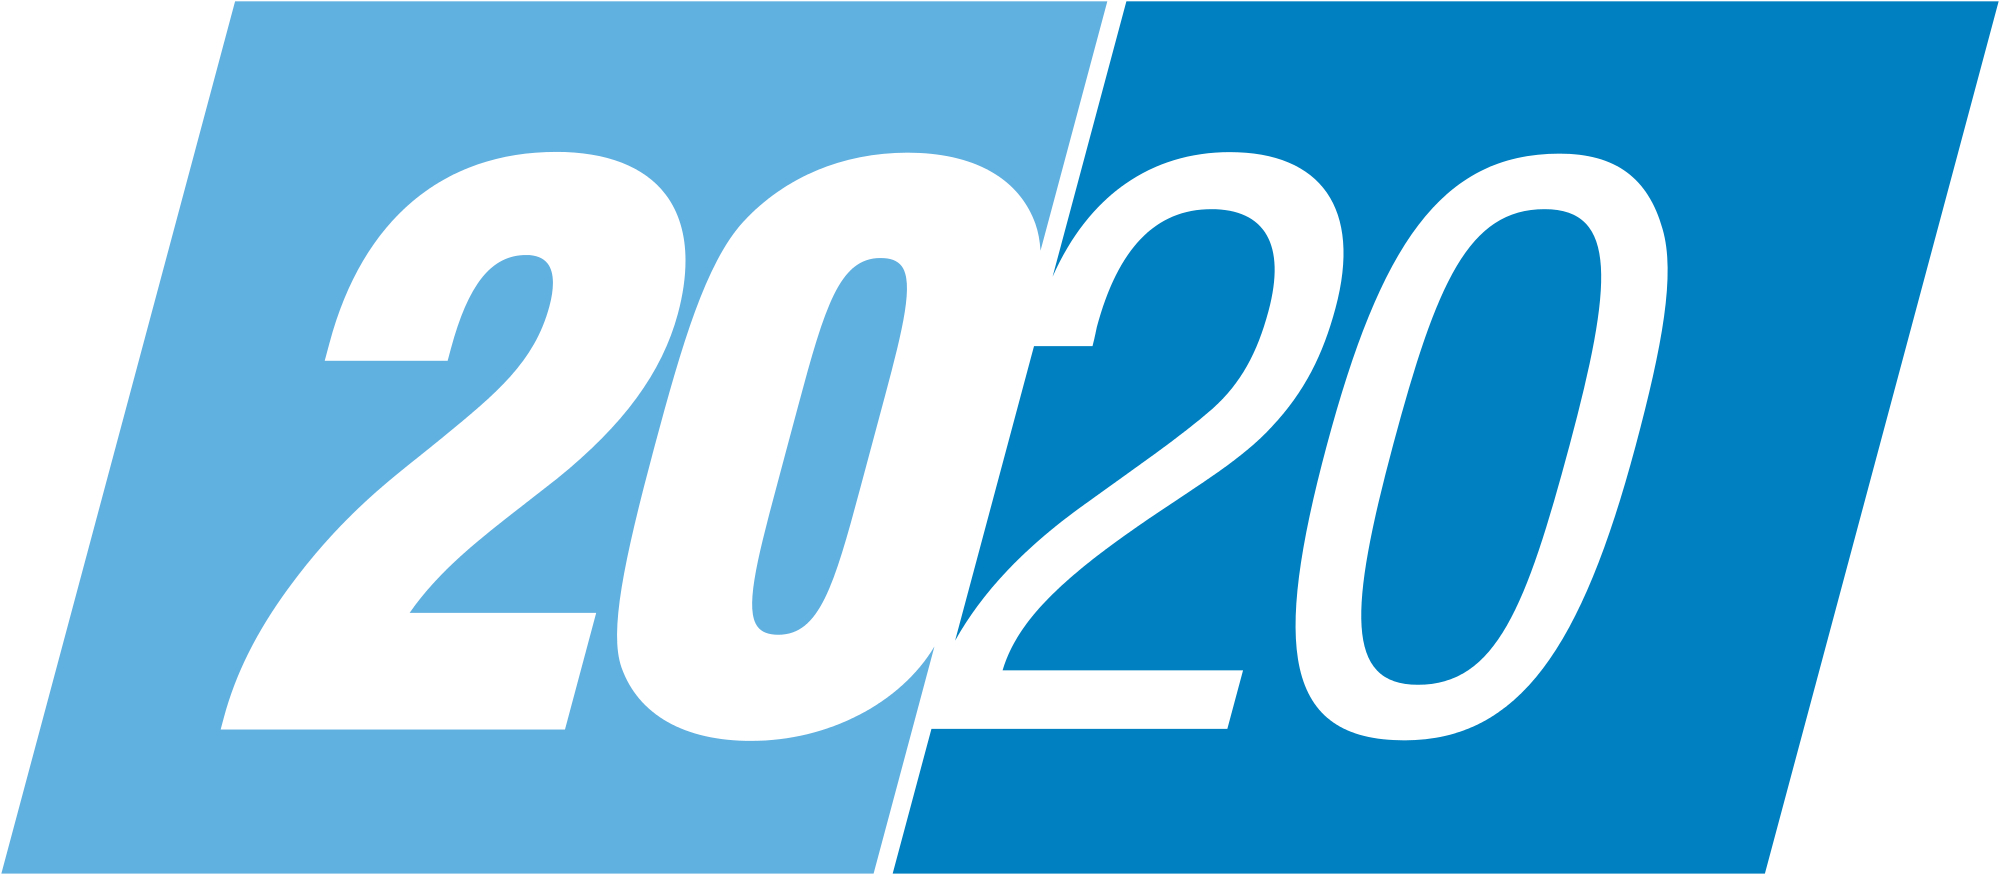 2020 rok